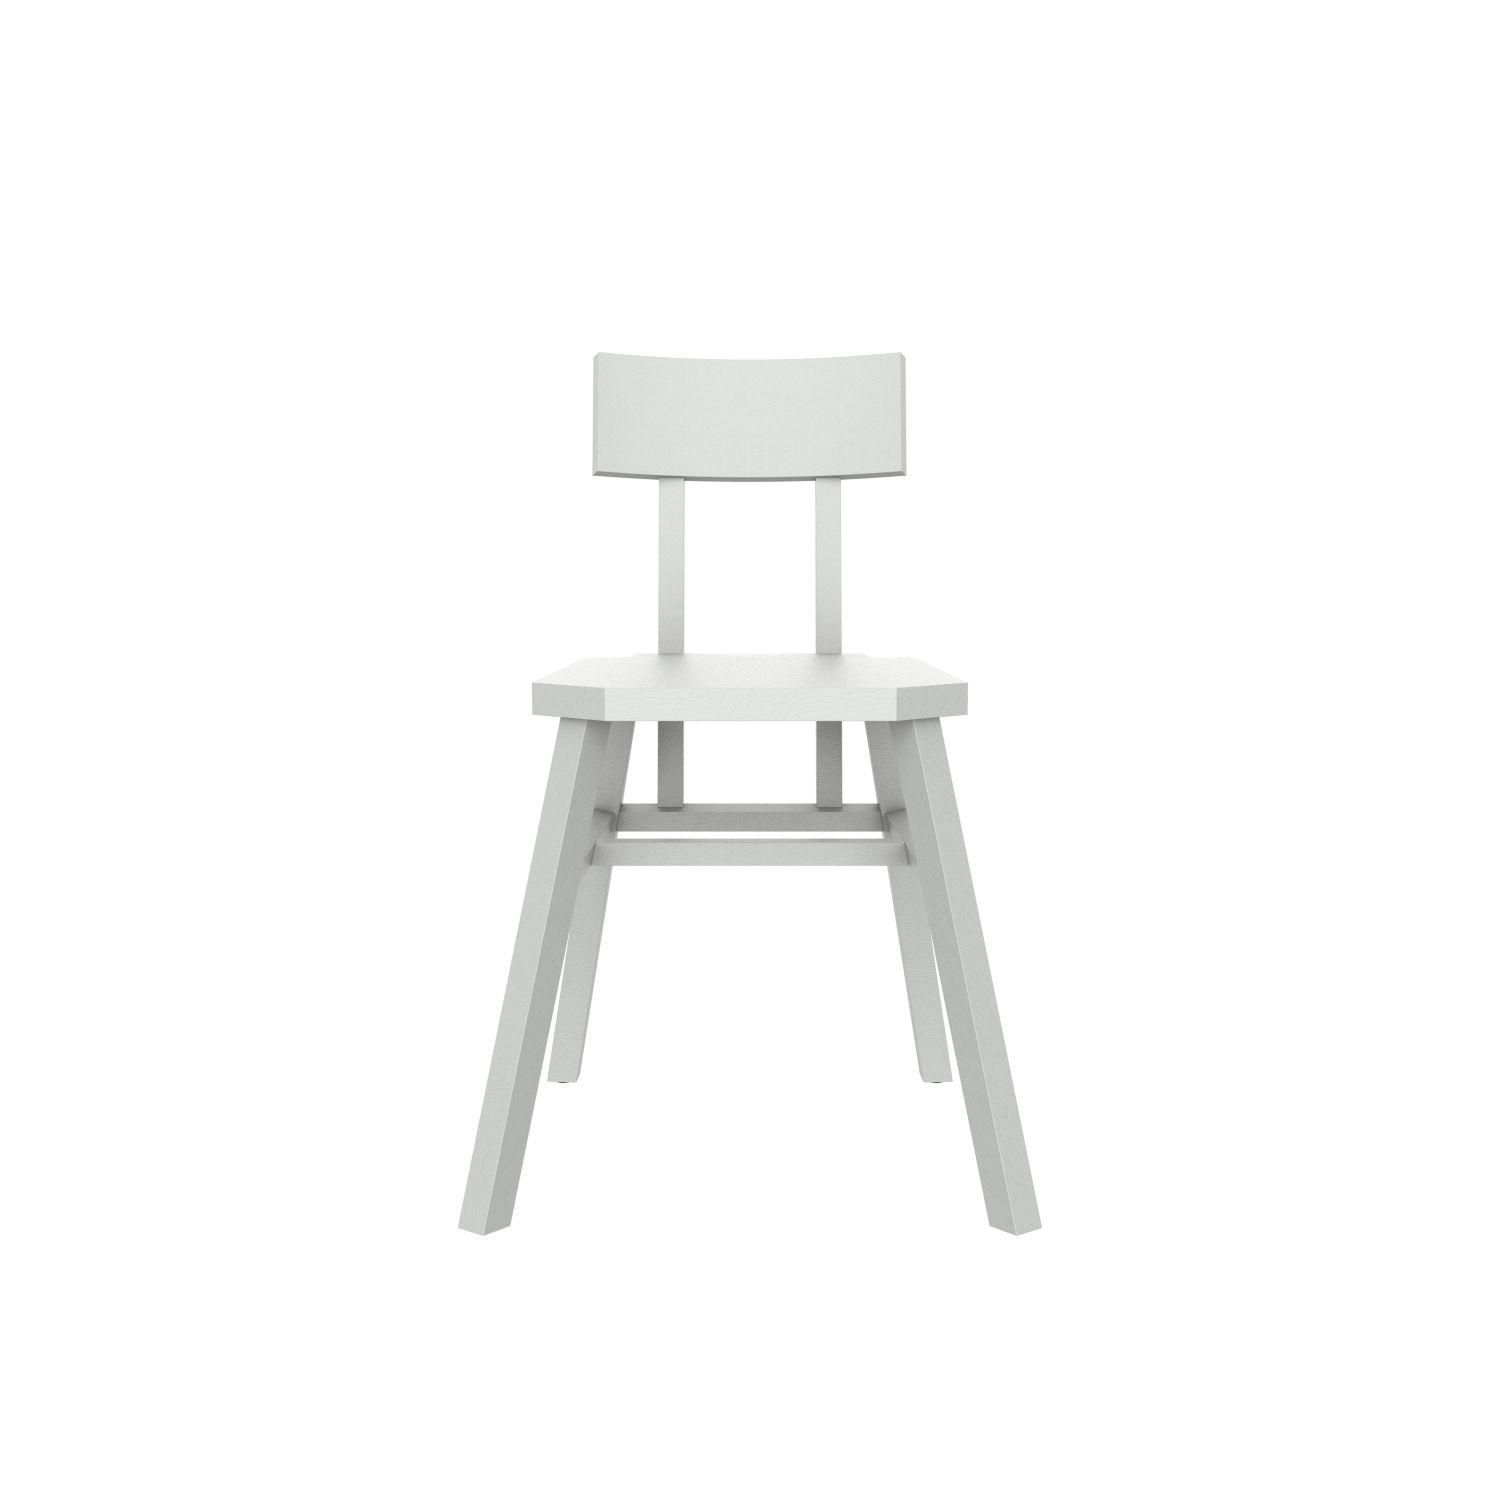 avl spider chair light grey